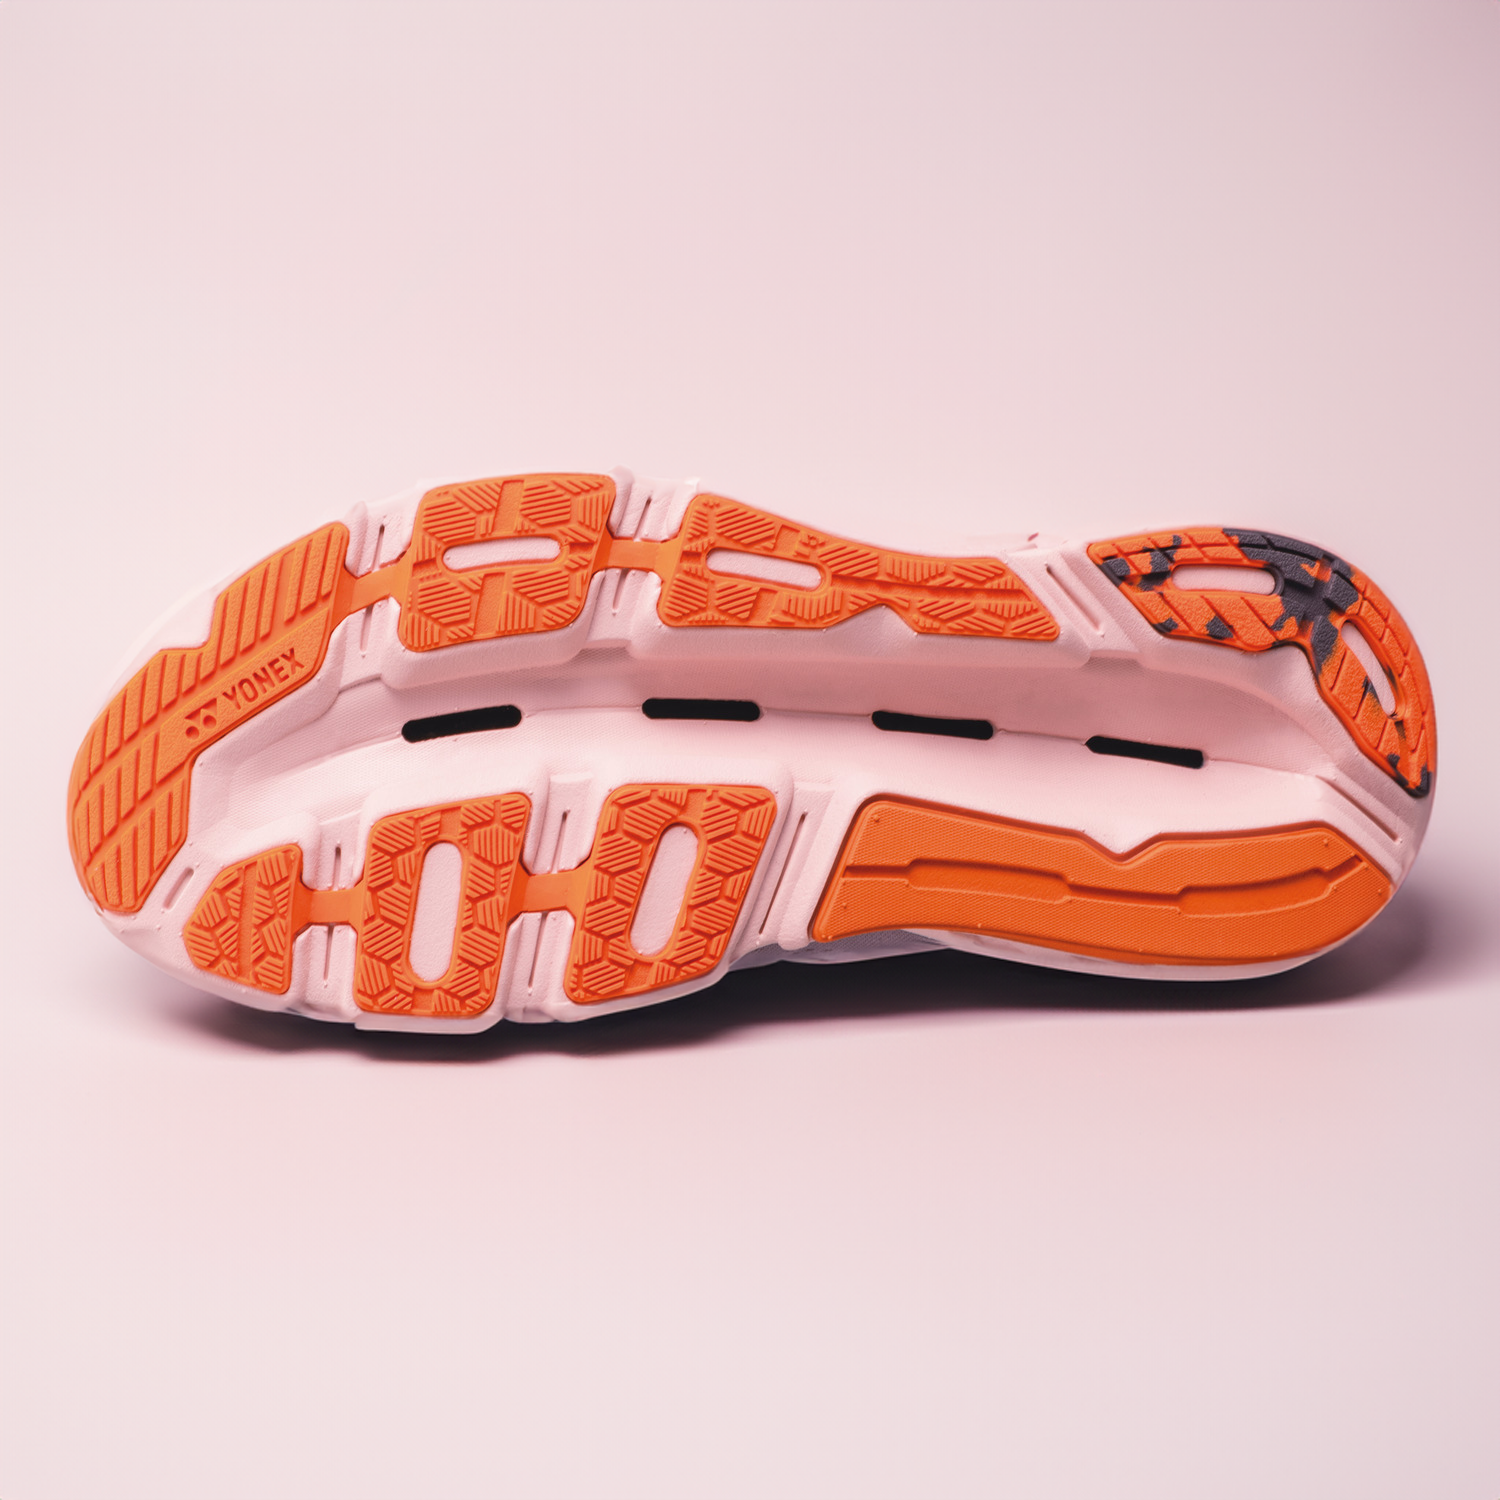 Yonex Saferun 200X (Mauve Pink) Women's Running Training Shoe - PREORDER